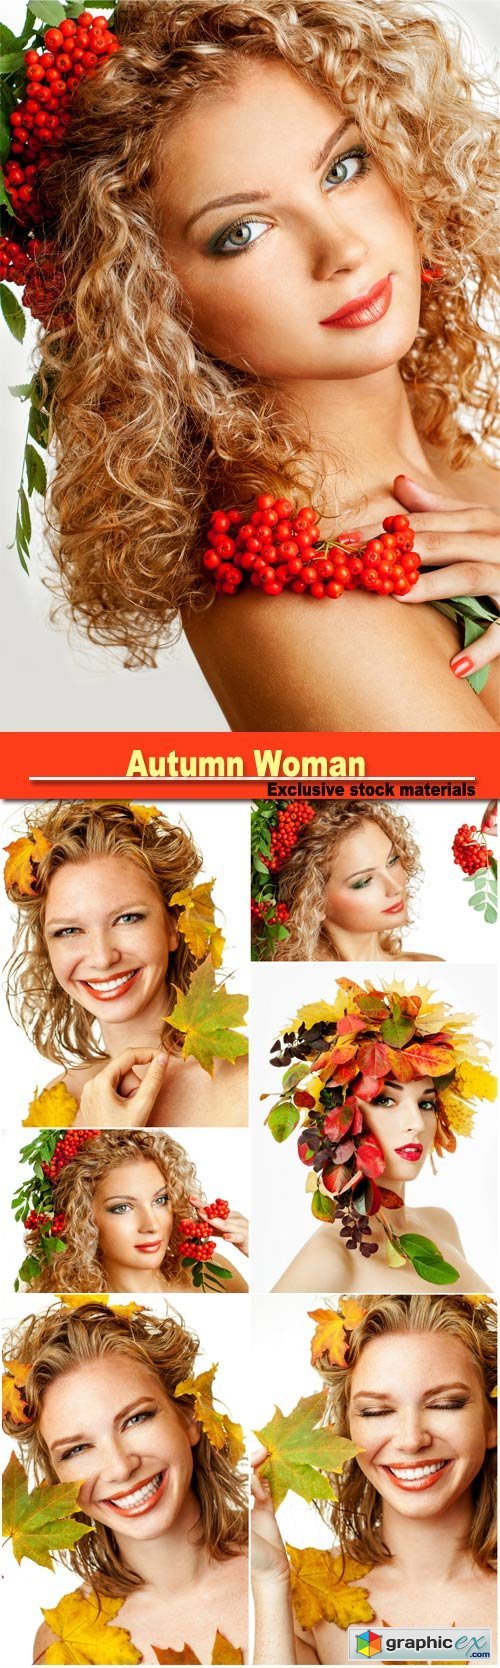 Autumn woman fashion portrait, beautiful model girl with rowan berries